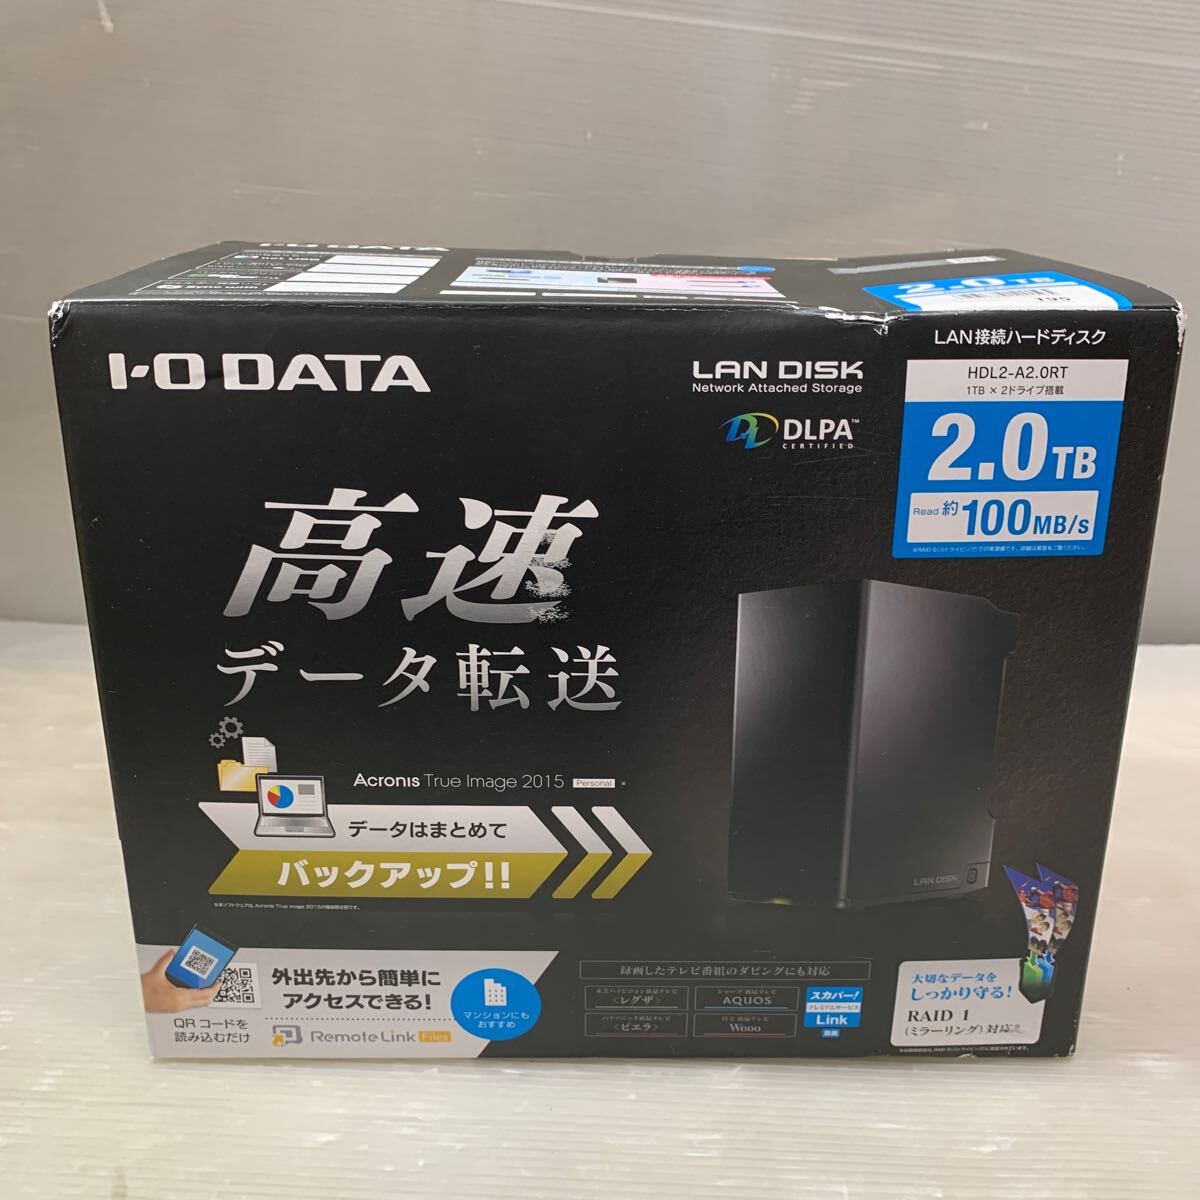 I*O DATA LAN подключение жесткий диск HDL2-A2.0RT не использовался товар 